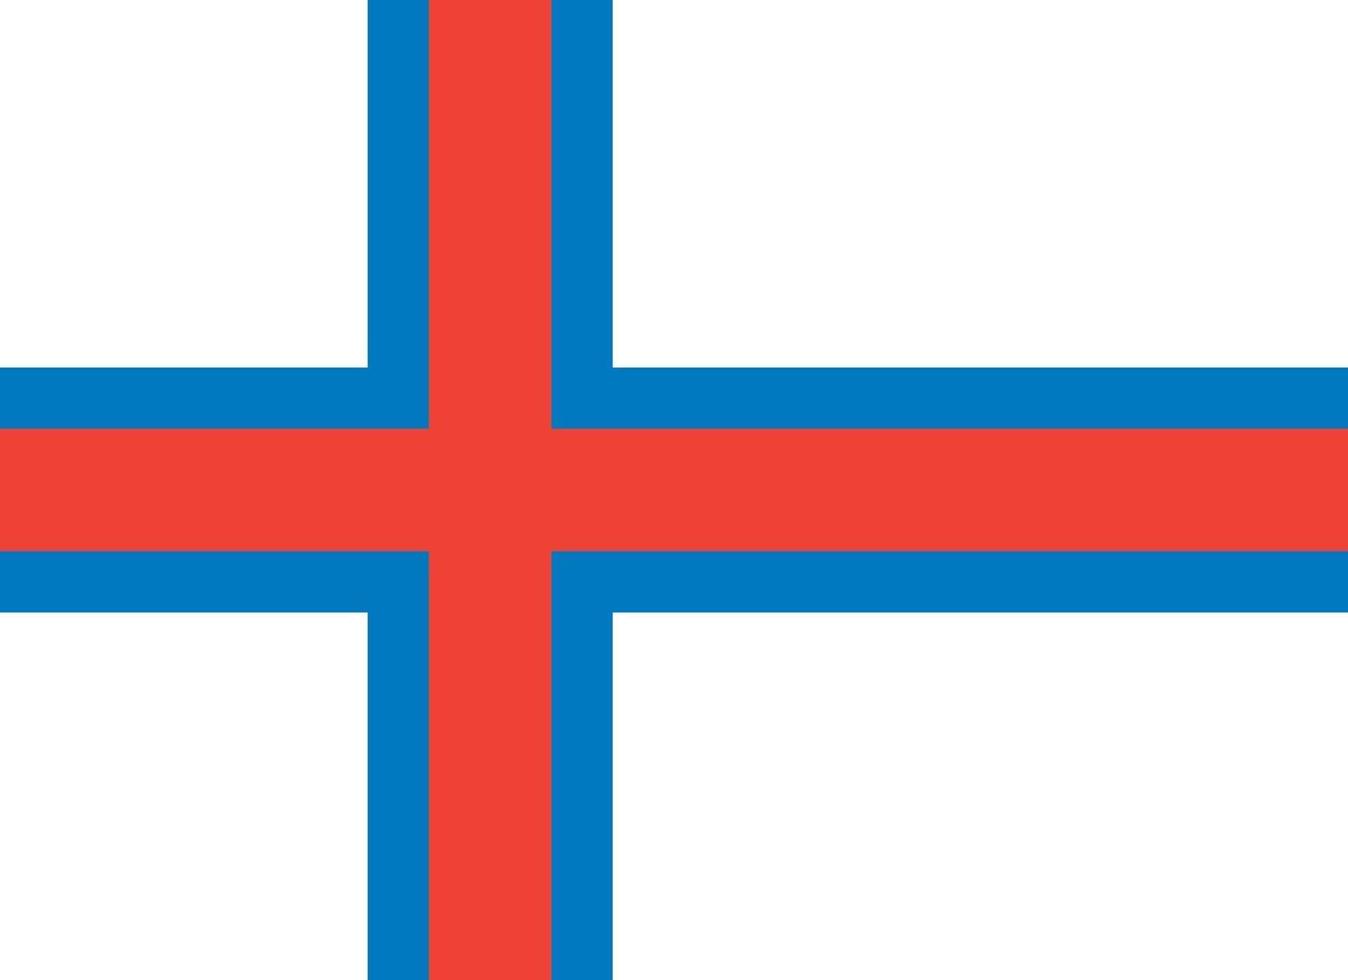 Faroe Islands officially flag vector